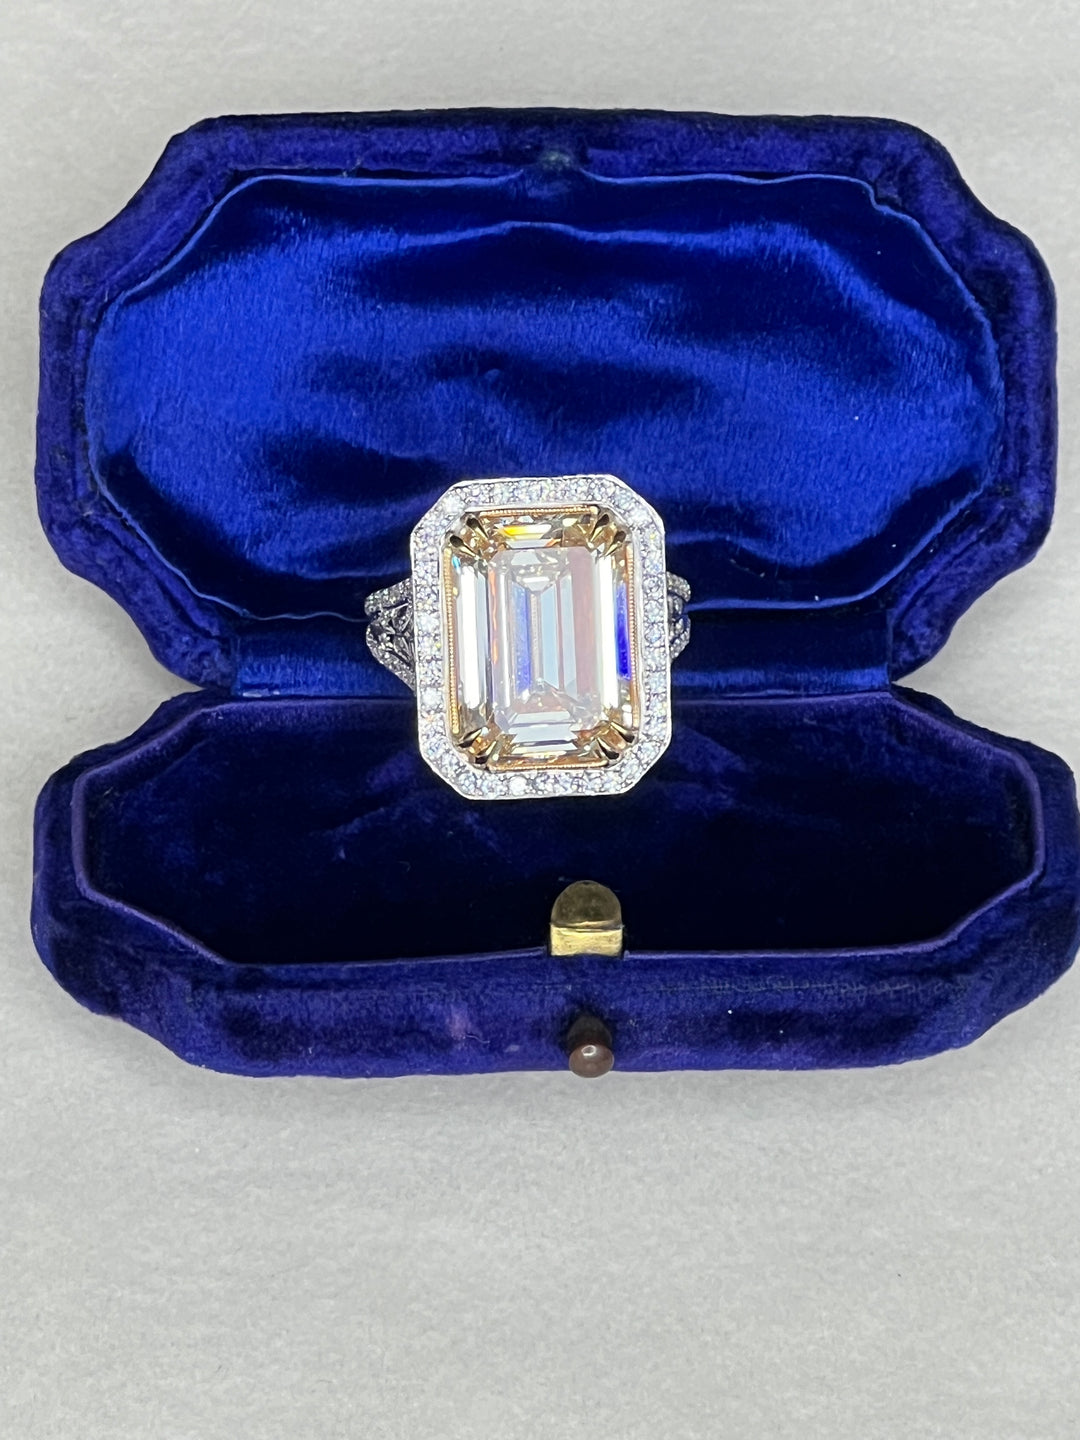 10.05 Carat Emerald Cut Yellow Diamond and 18K Gold Estate Ring